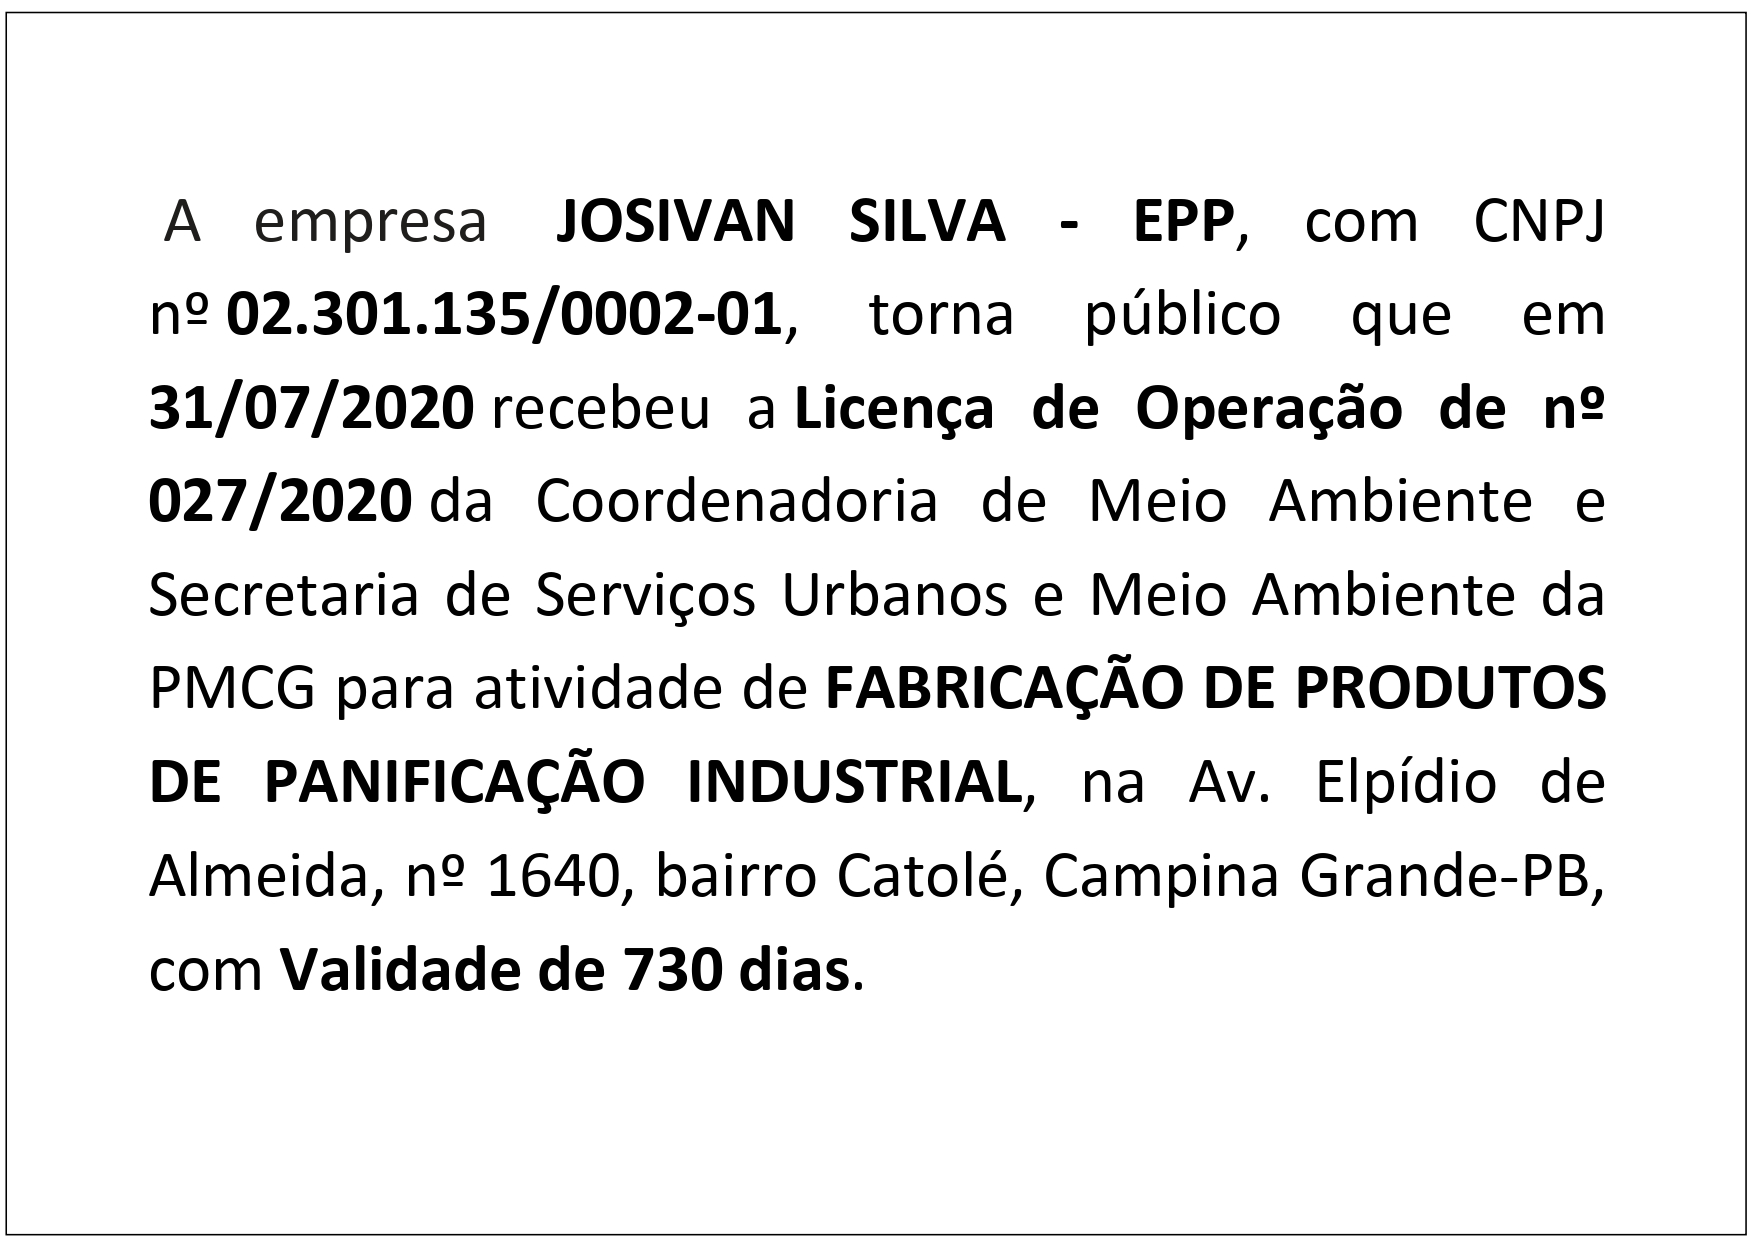 JOSIVAN SILVA – EPP – Licença de Operação nº 027/2020